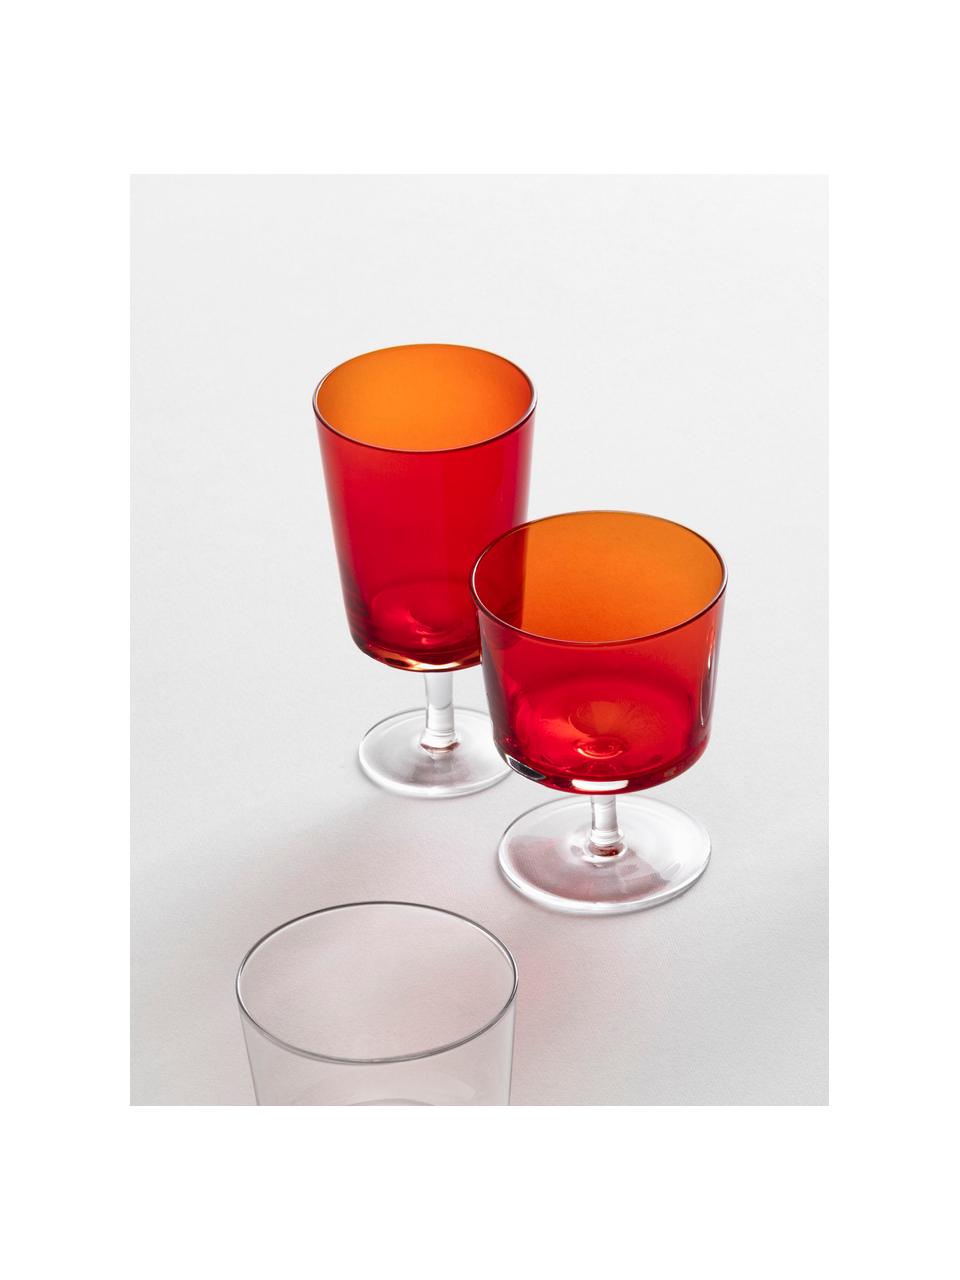 Bicchieri vino bianco fatti a mano Aurora 2 pz, Vetro, Rosso, trasparente, Ø 8 x Alt. 10 cm, 220 ml